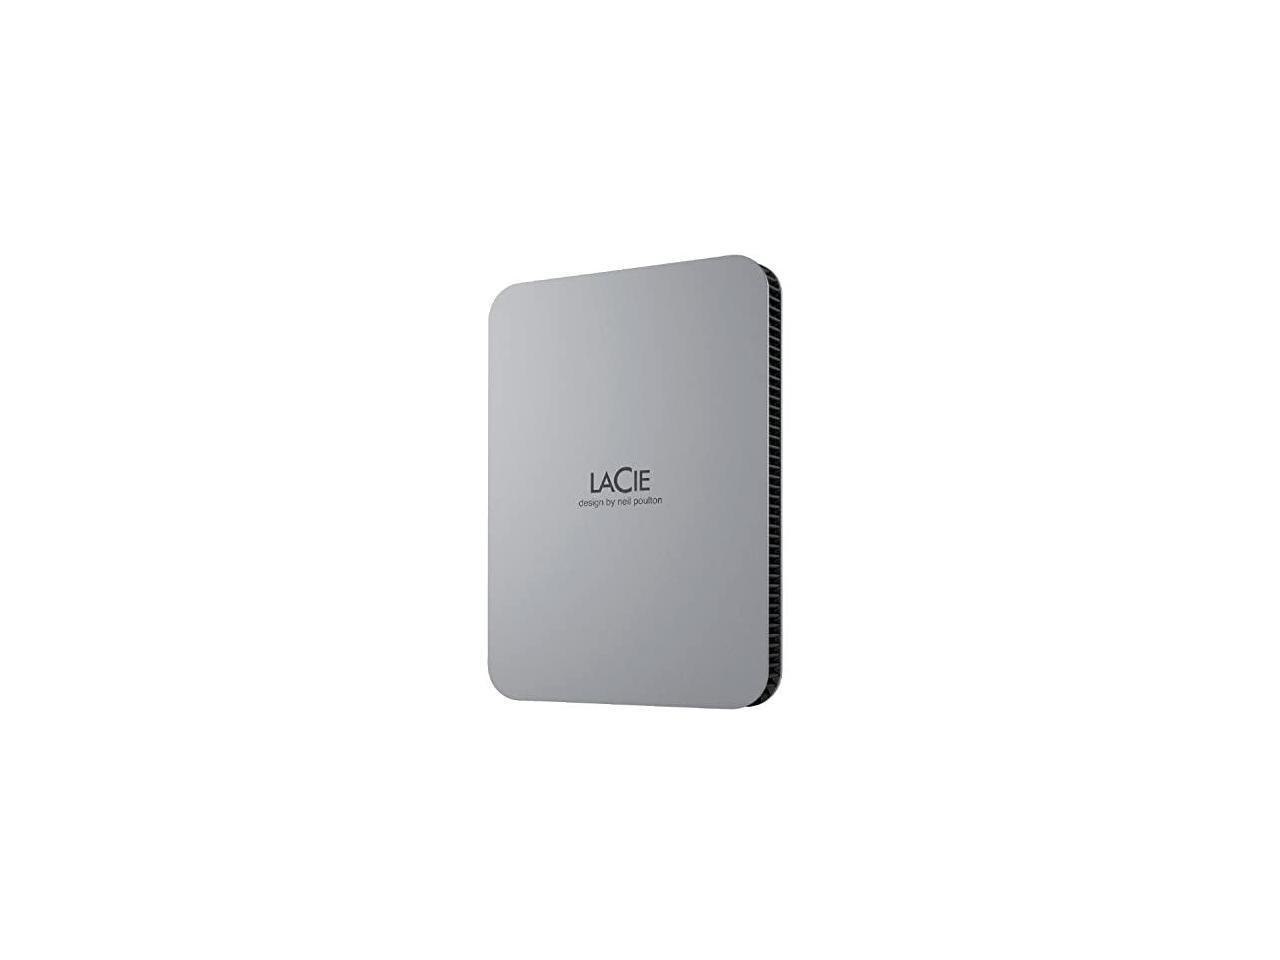 LaCie STLP2000400 2 TB Portable Hard Drive External Moon Silver Usb 3.1 Type C